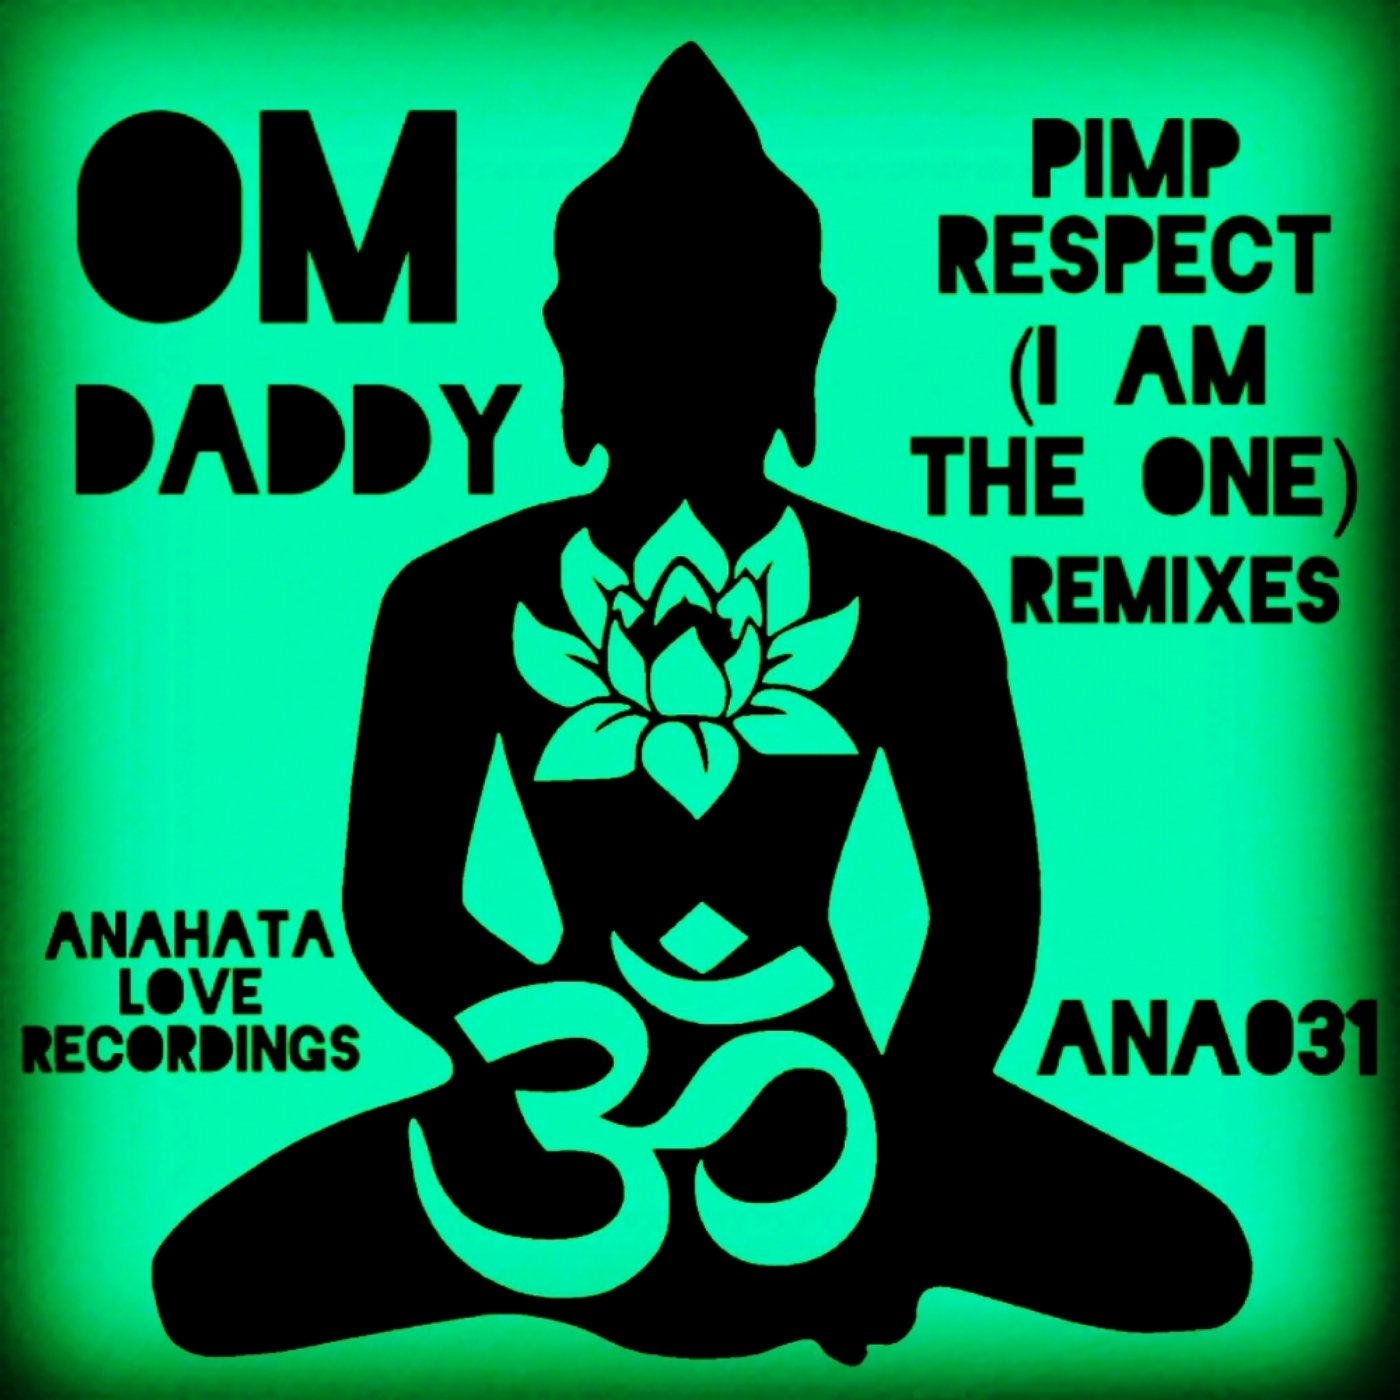 Acid Funk Original Mix. Feel Sunshine. "Ana_bon" records. Daddy club